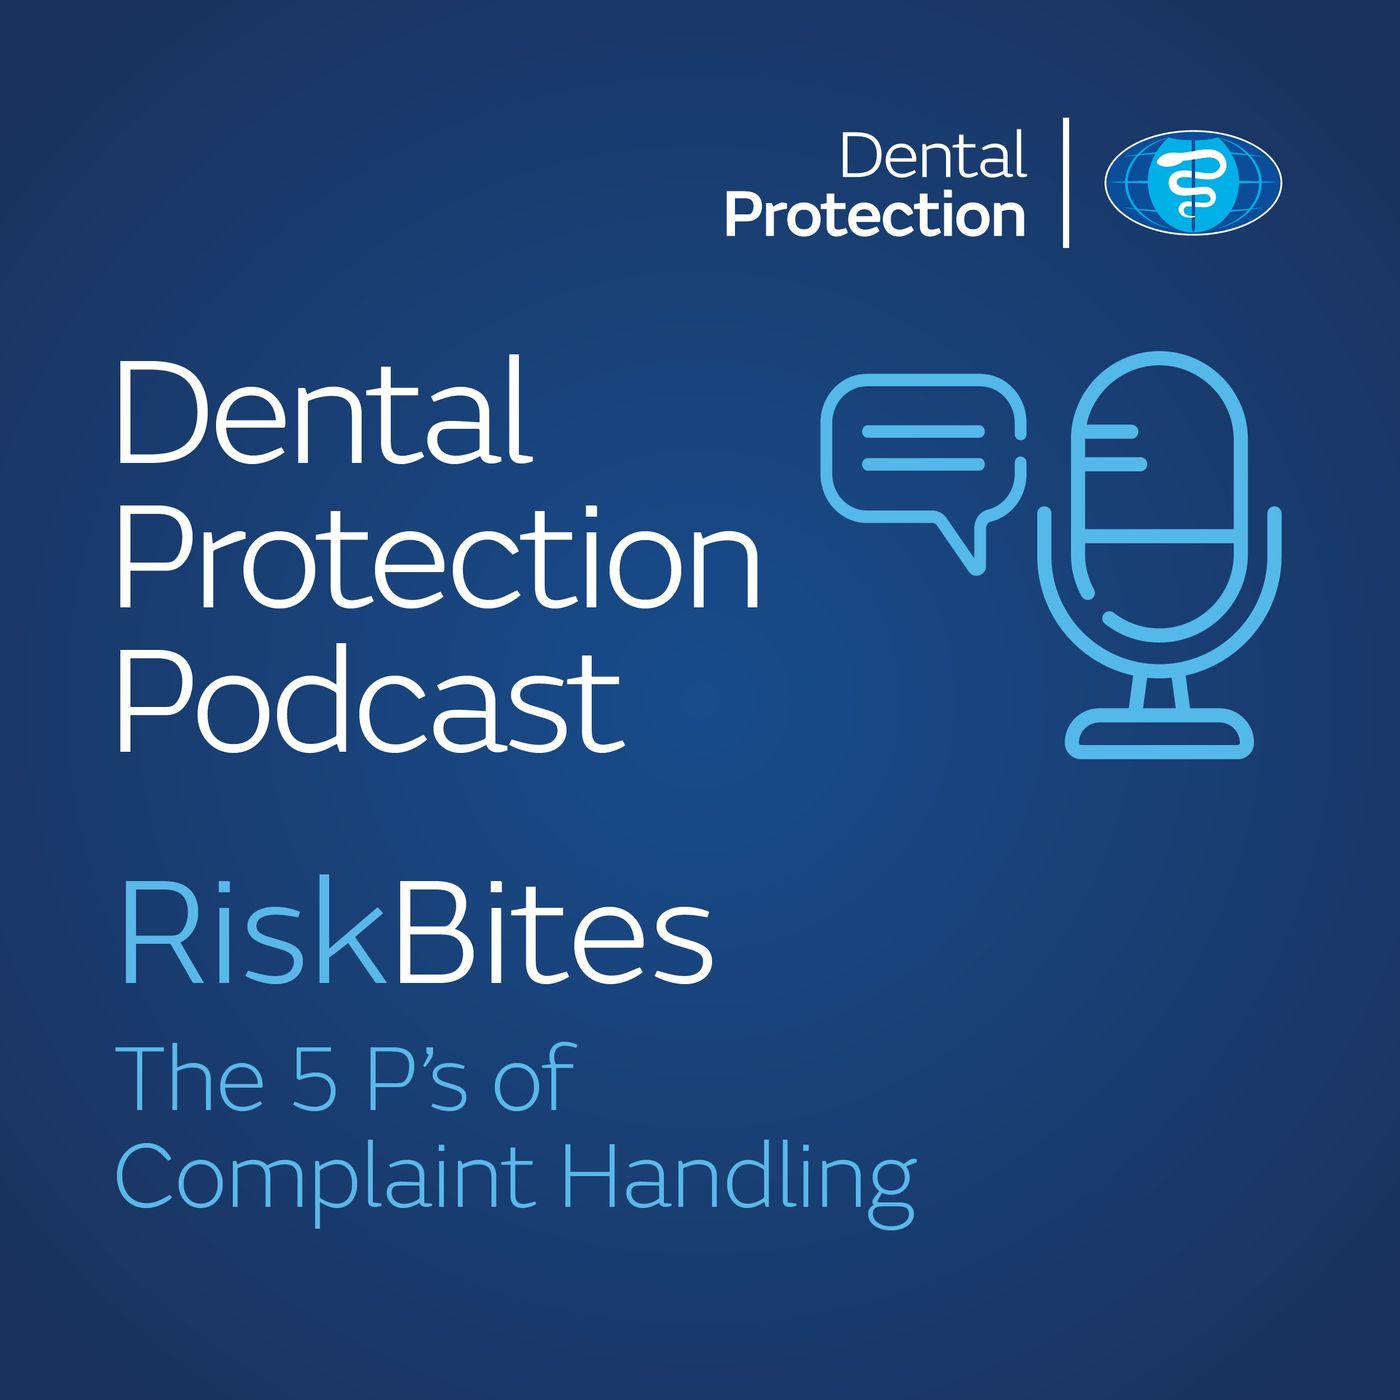 Risk Bites: The 5 Ps of Complaint Handling